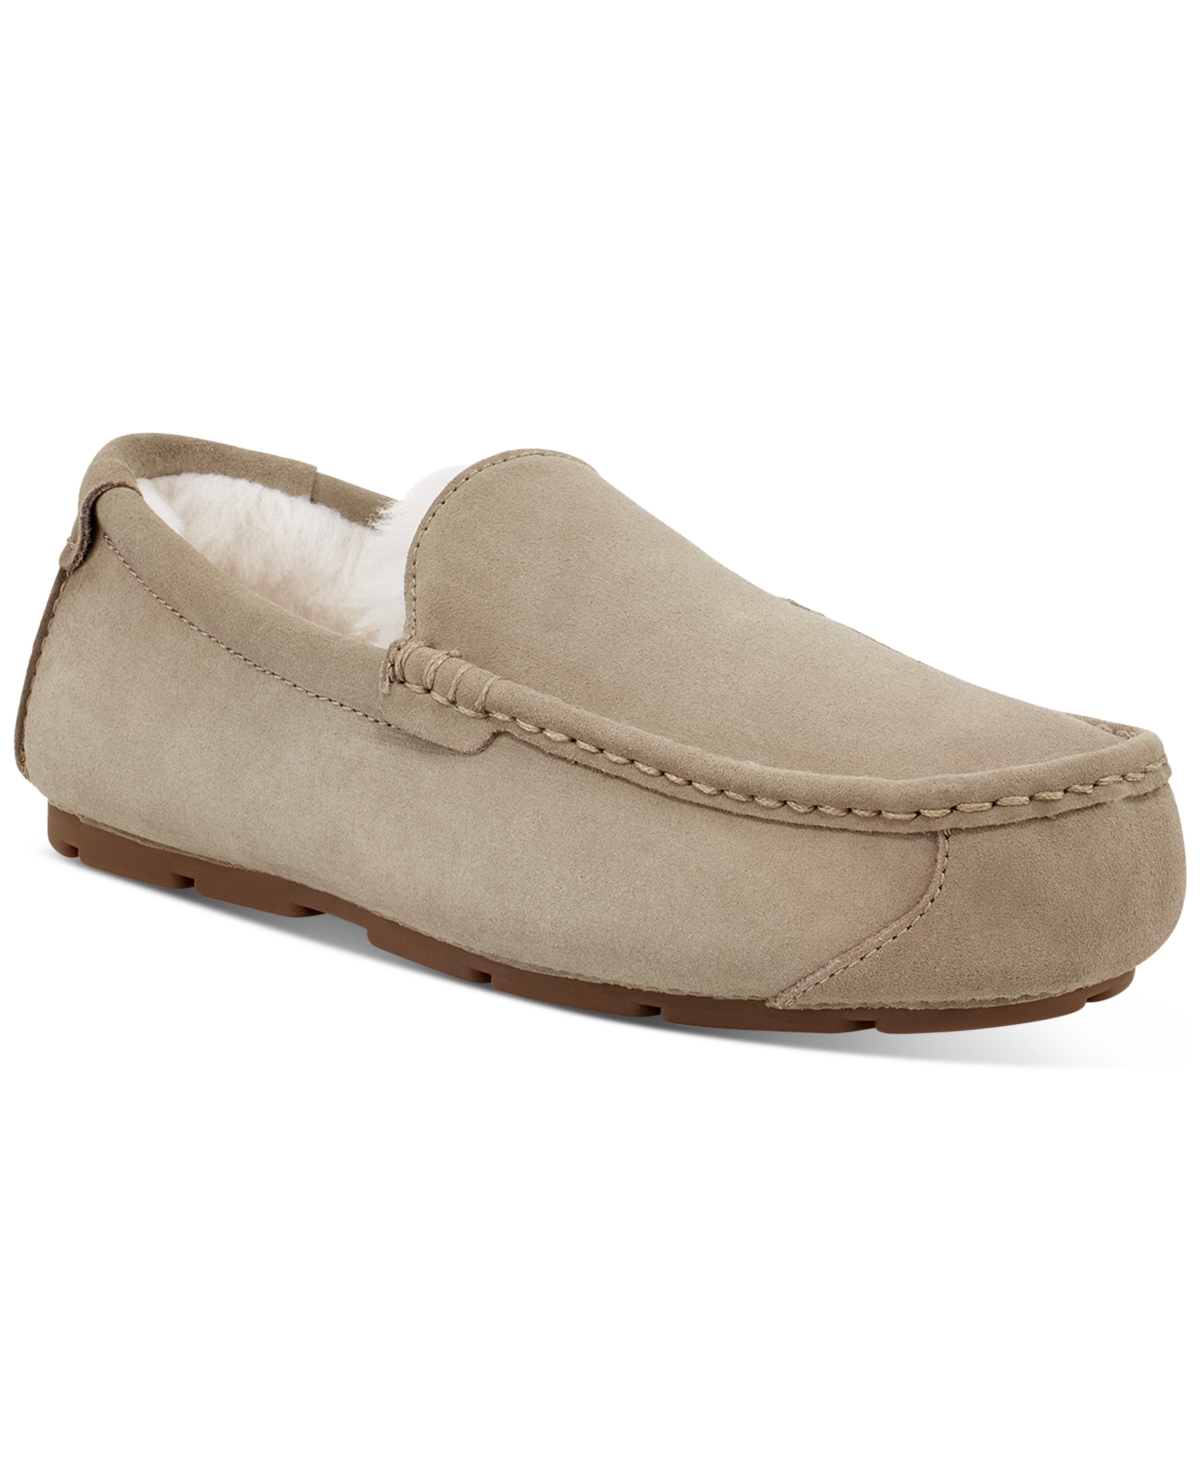 Koolaburra by Ugg Tipton Men's Slipper Men's Shoes